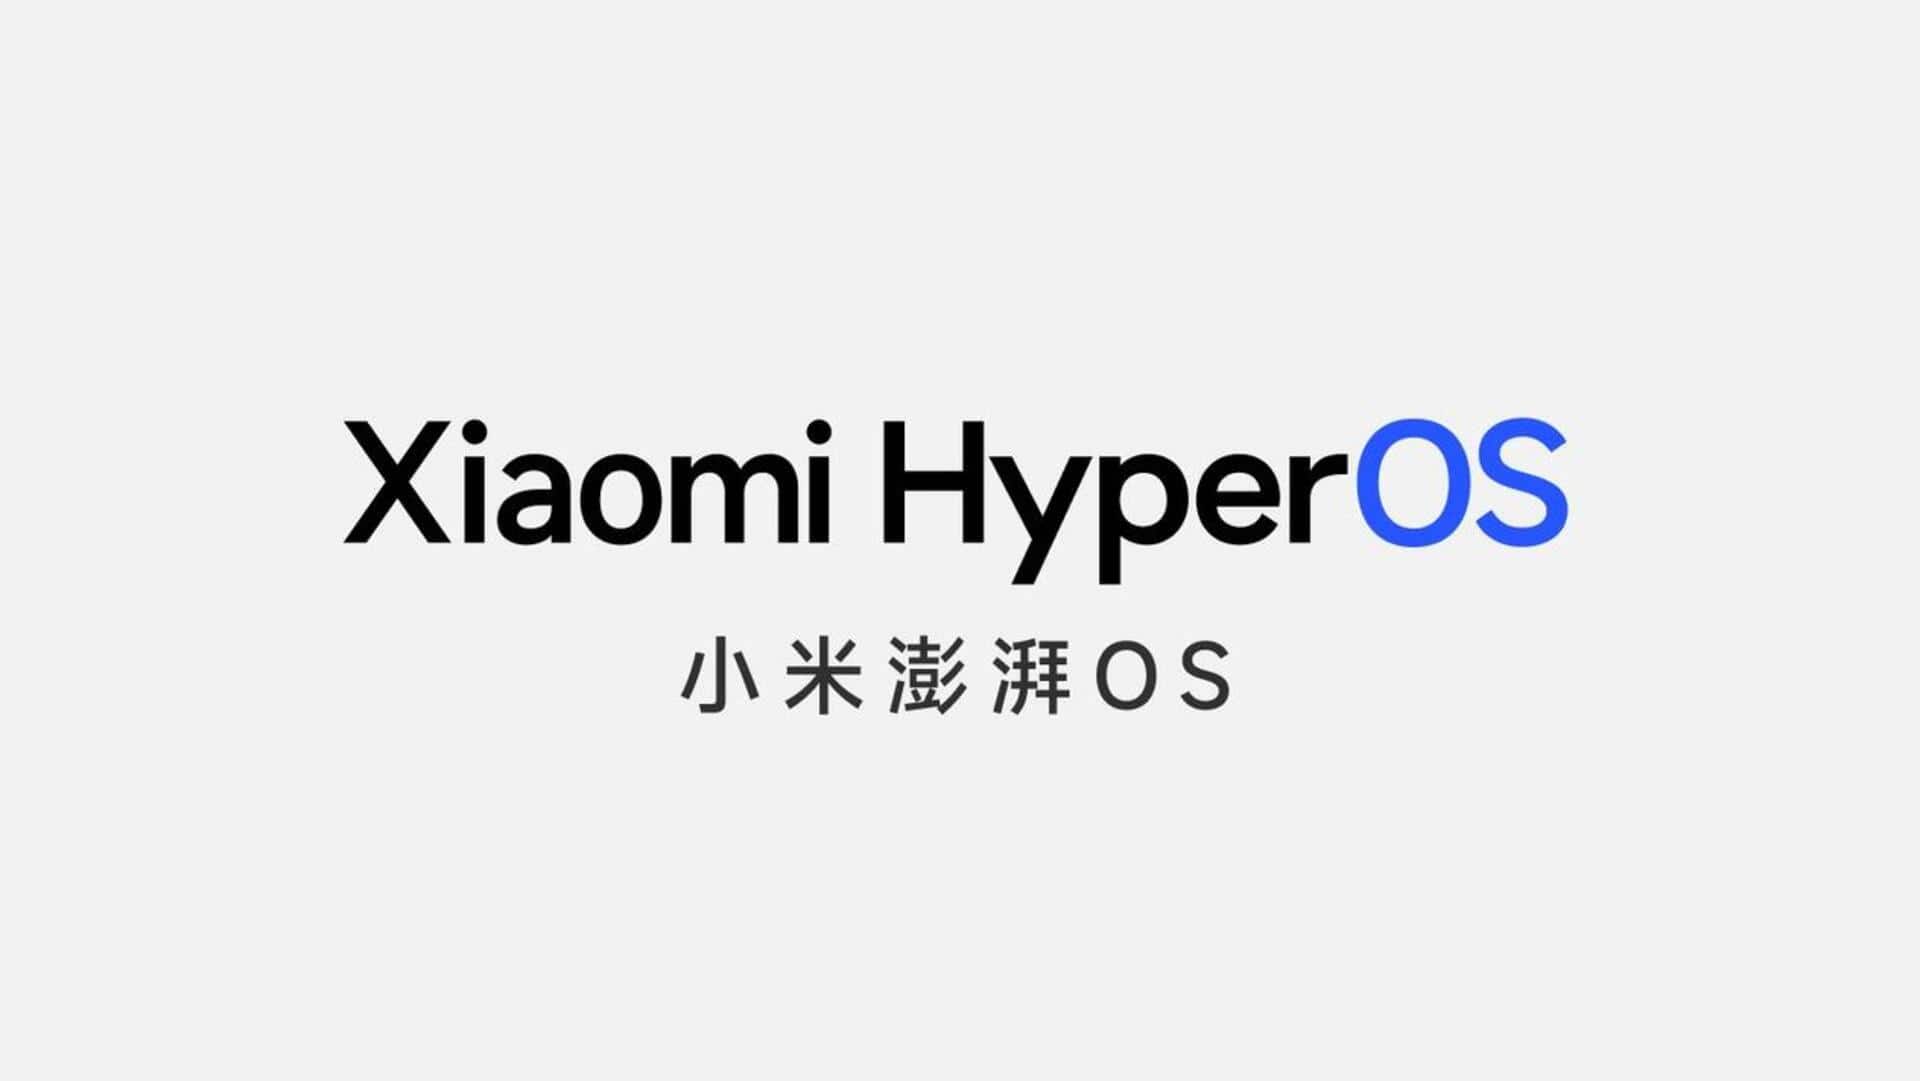 HyperOS: A sneak peek into Xiaomi's 'historic' operating system